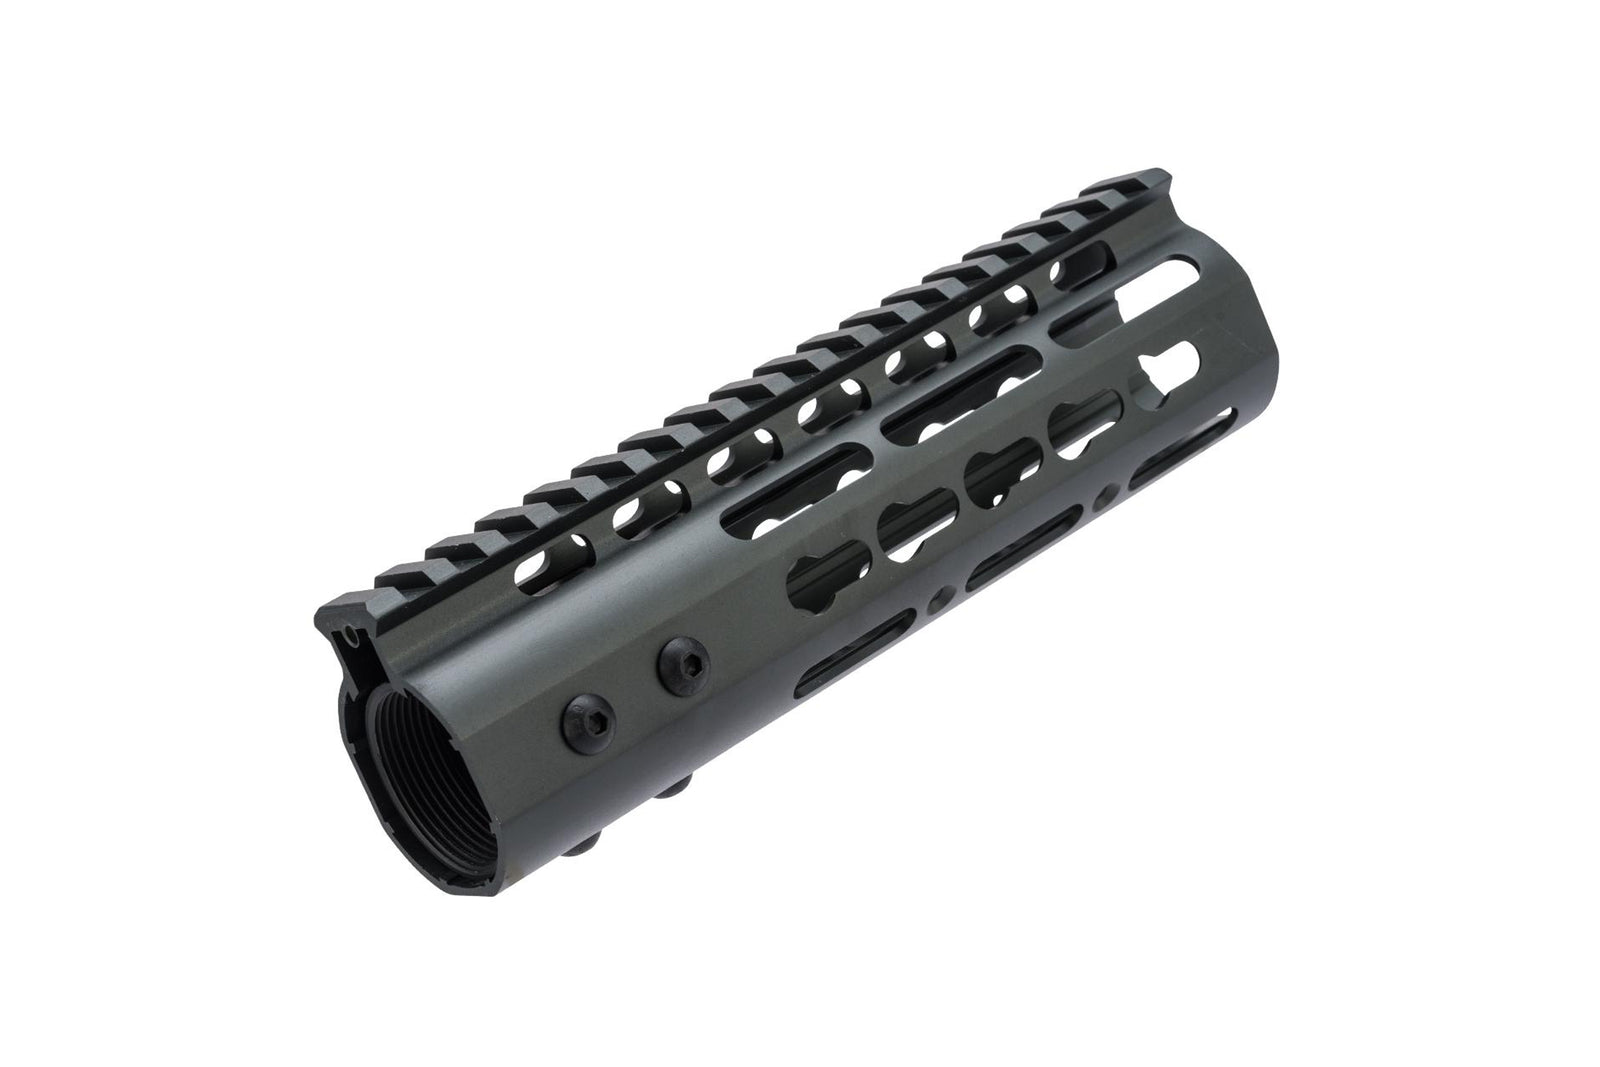 ZCI CNC Aluminum KeyMod Ultra Slim Free Float Handguard for M4 / M16 AEG Rifles (Size: 7")